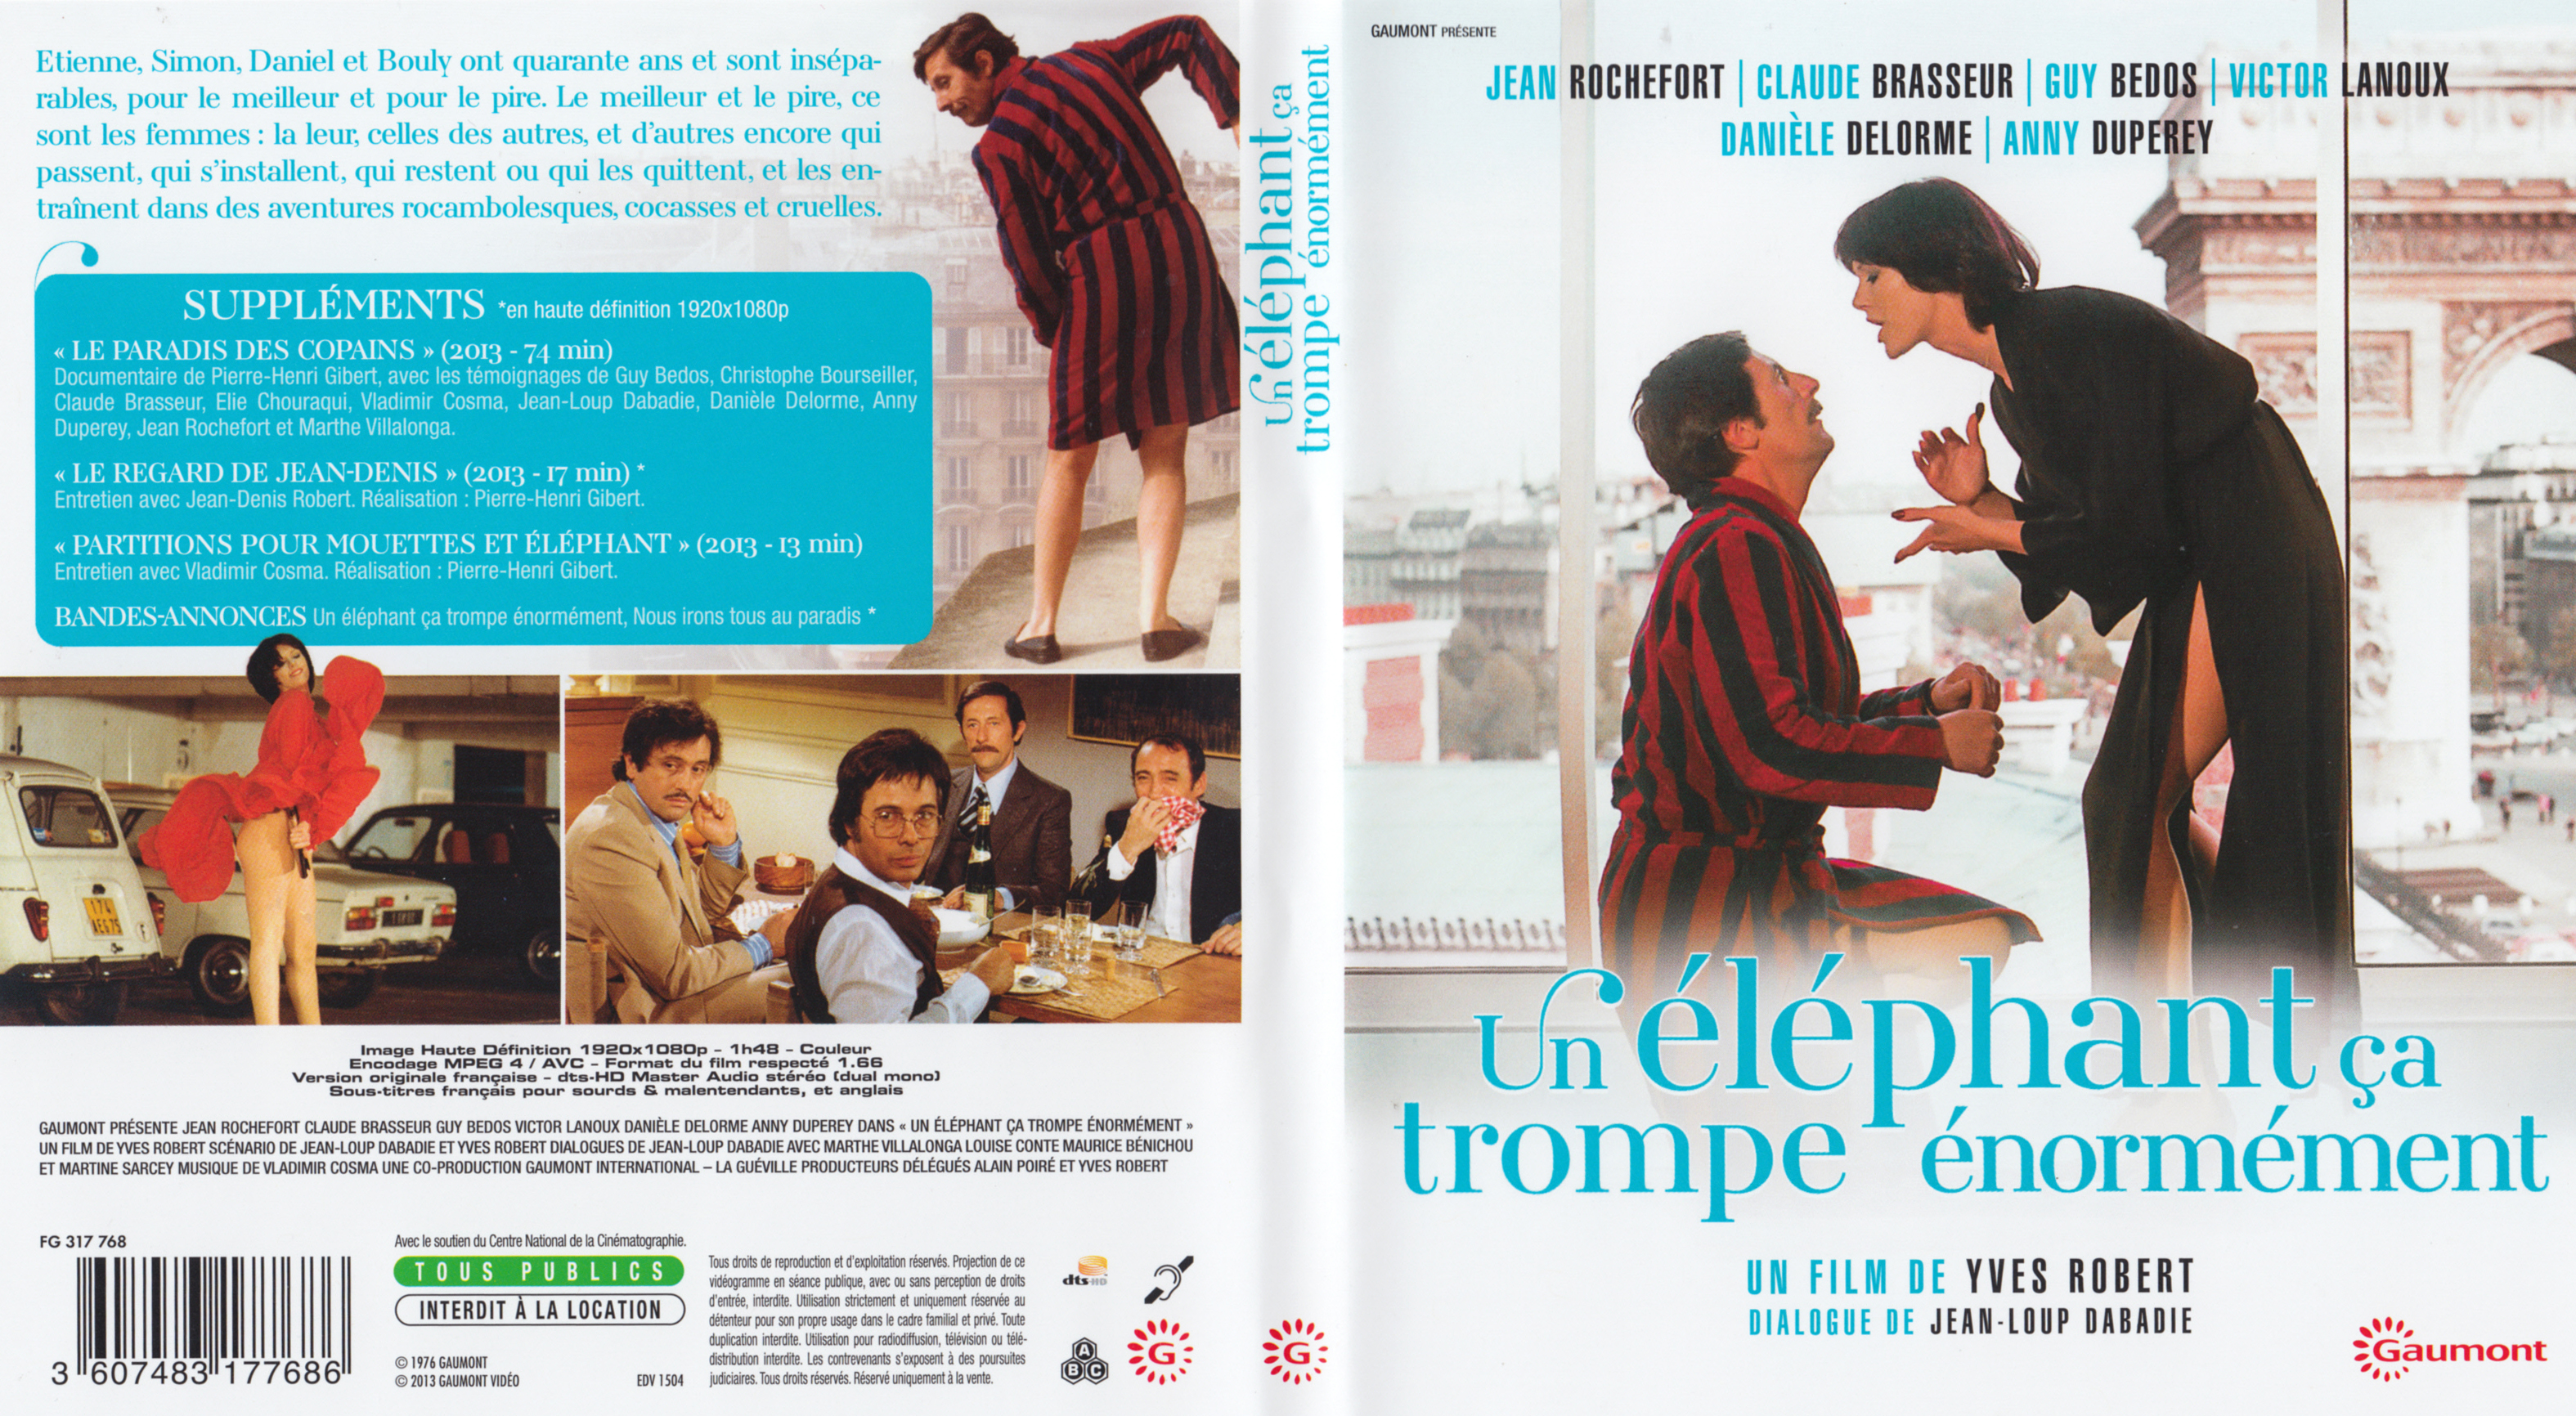 Jaquette DVD Un lphant ca trompe normment (BLU-RAY)